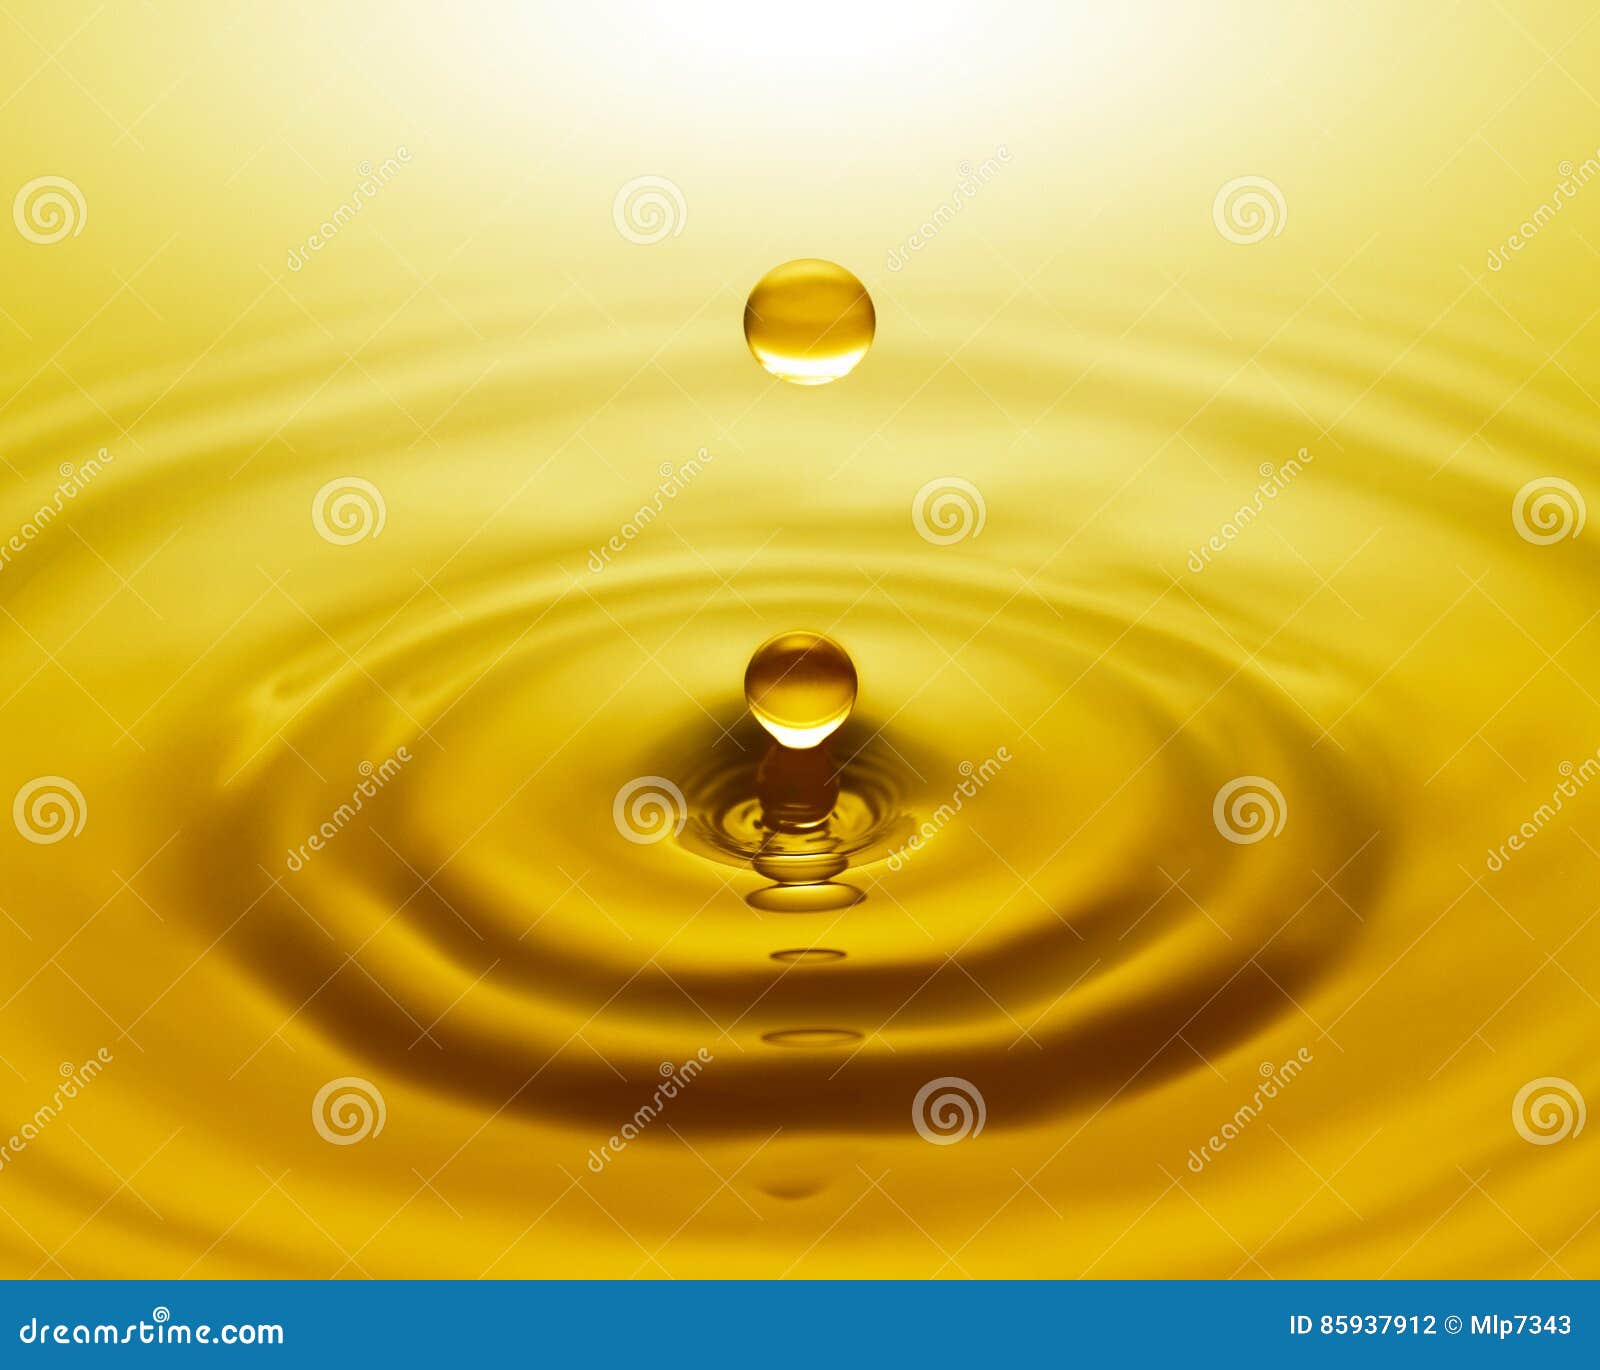 Golden water drop stock photo. Image of shape, calm, horizon - 85937912